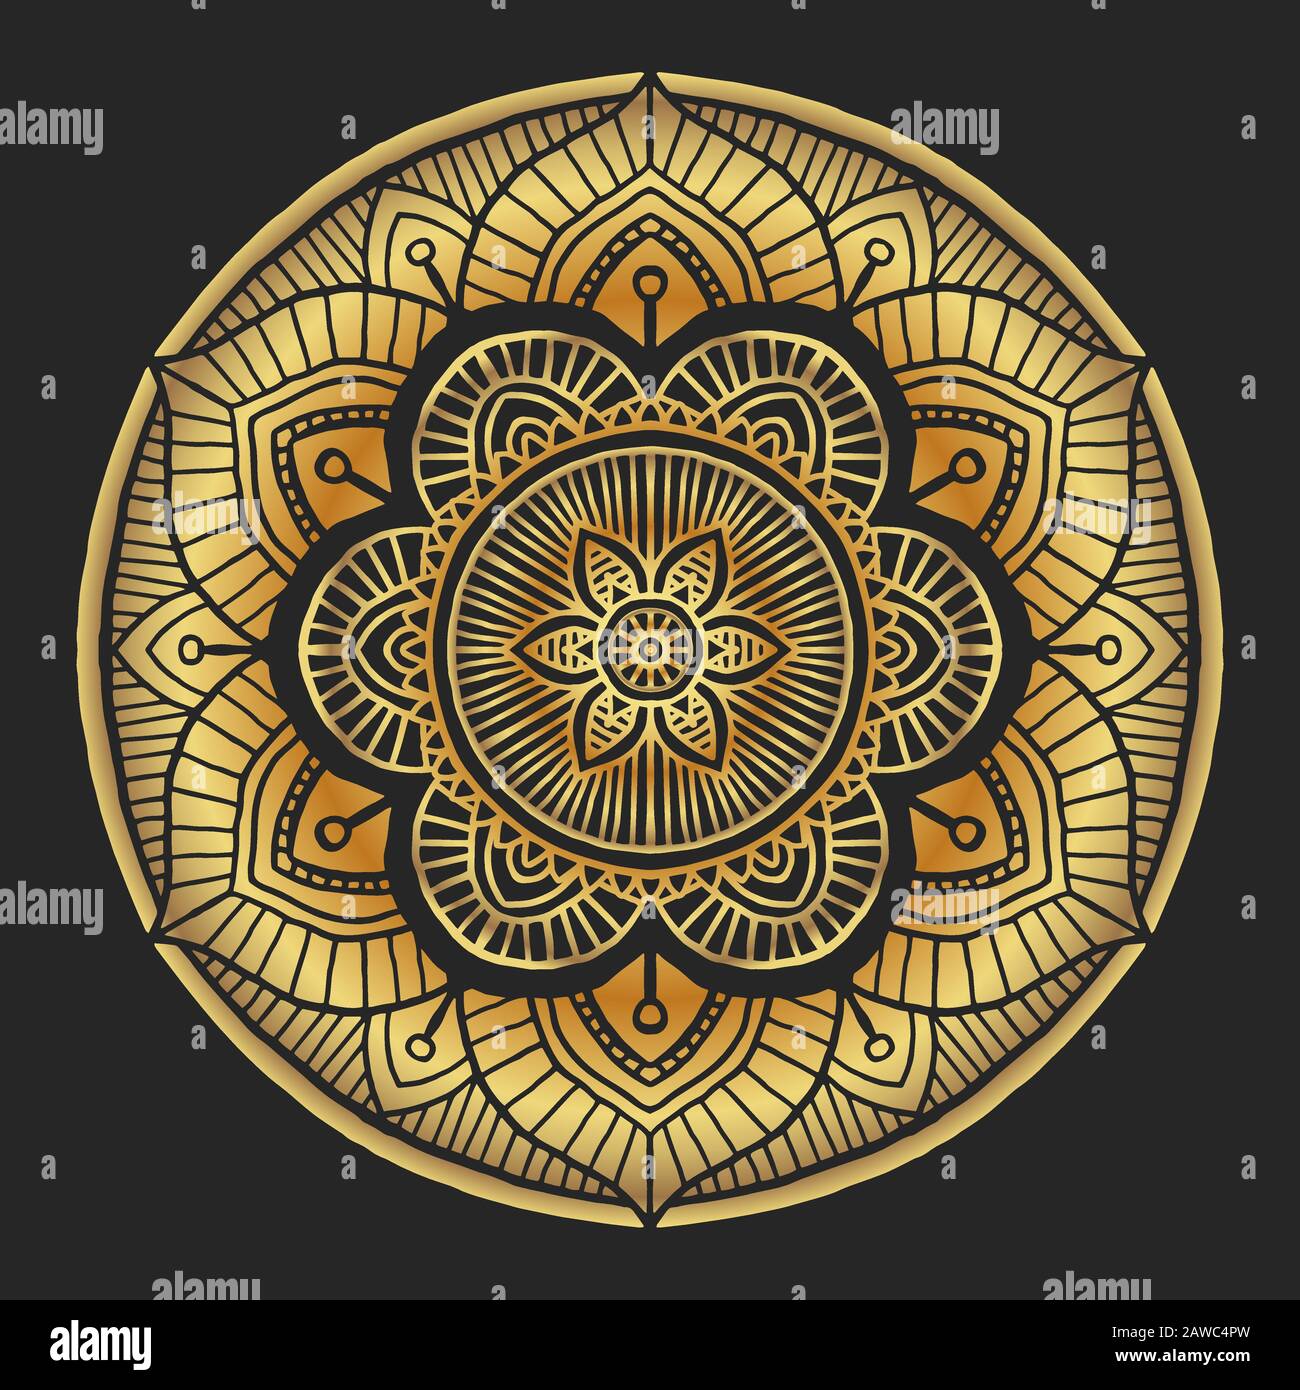 Luxury Golden Mandala decorative round ornament on black background, hand drawn Arabic islamic style - vector oriental ornament Stock Vector